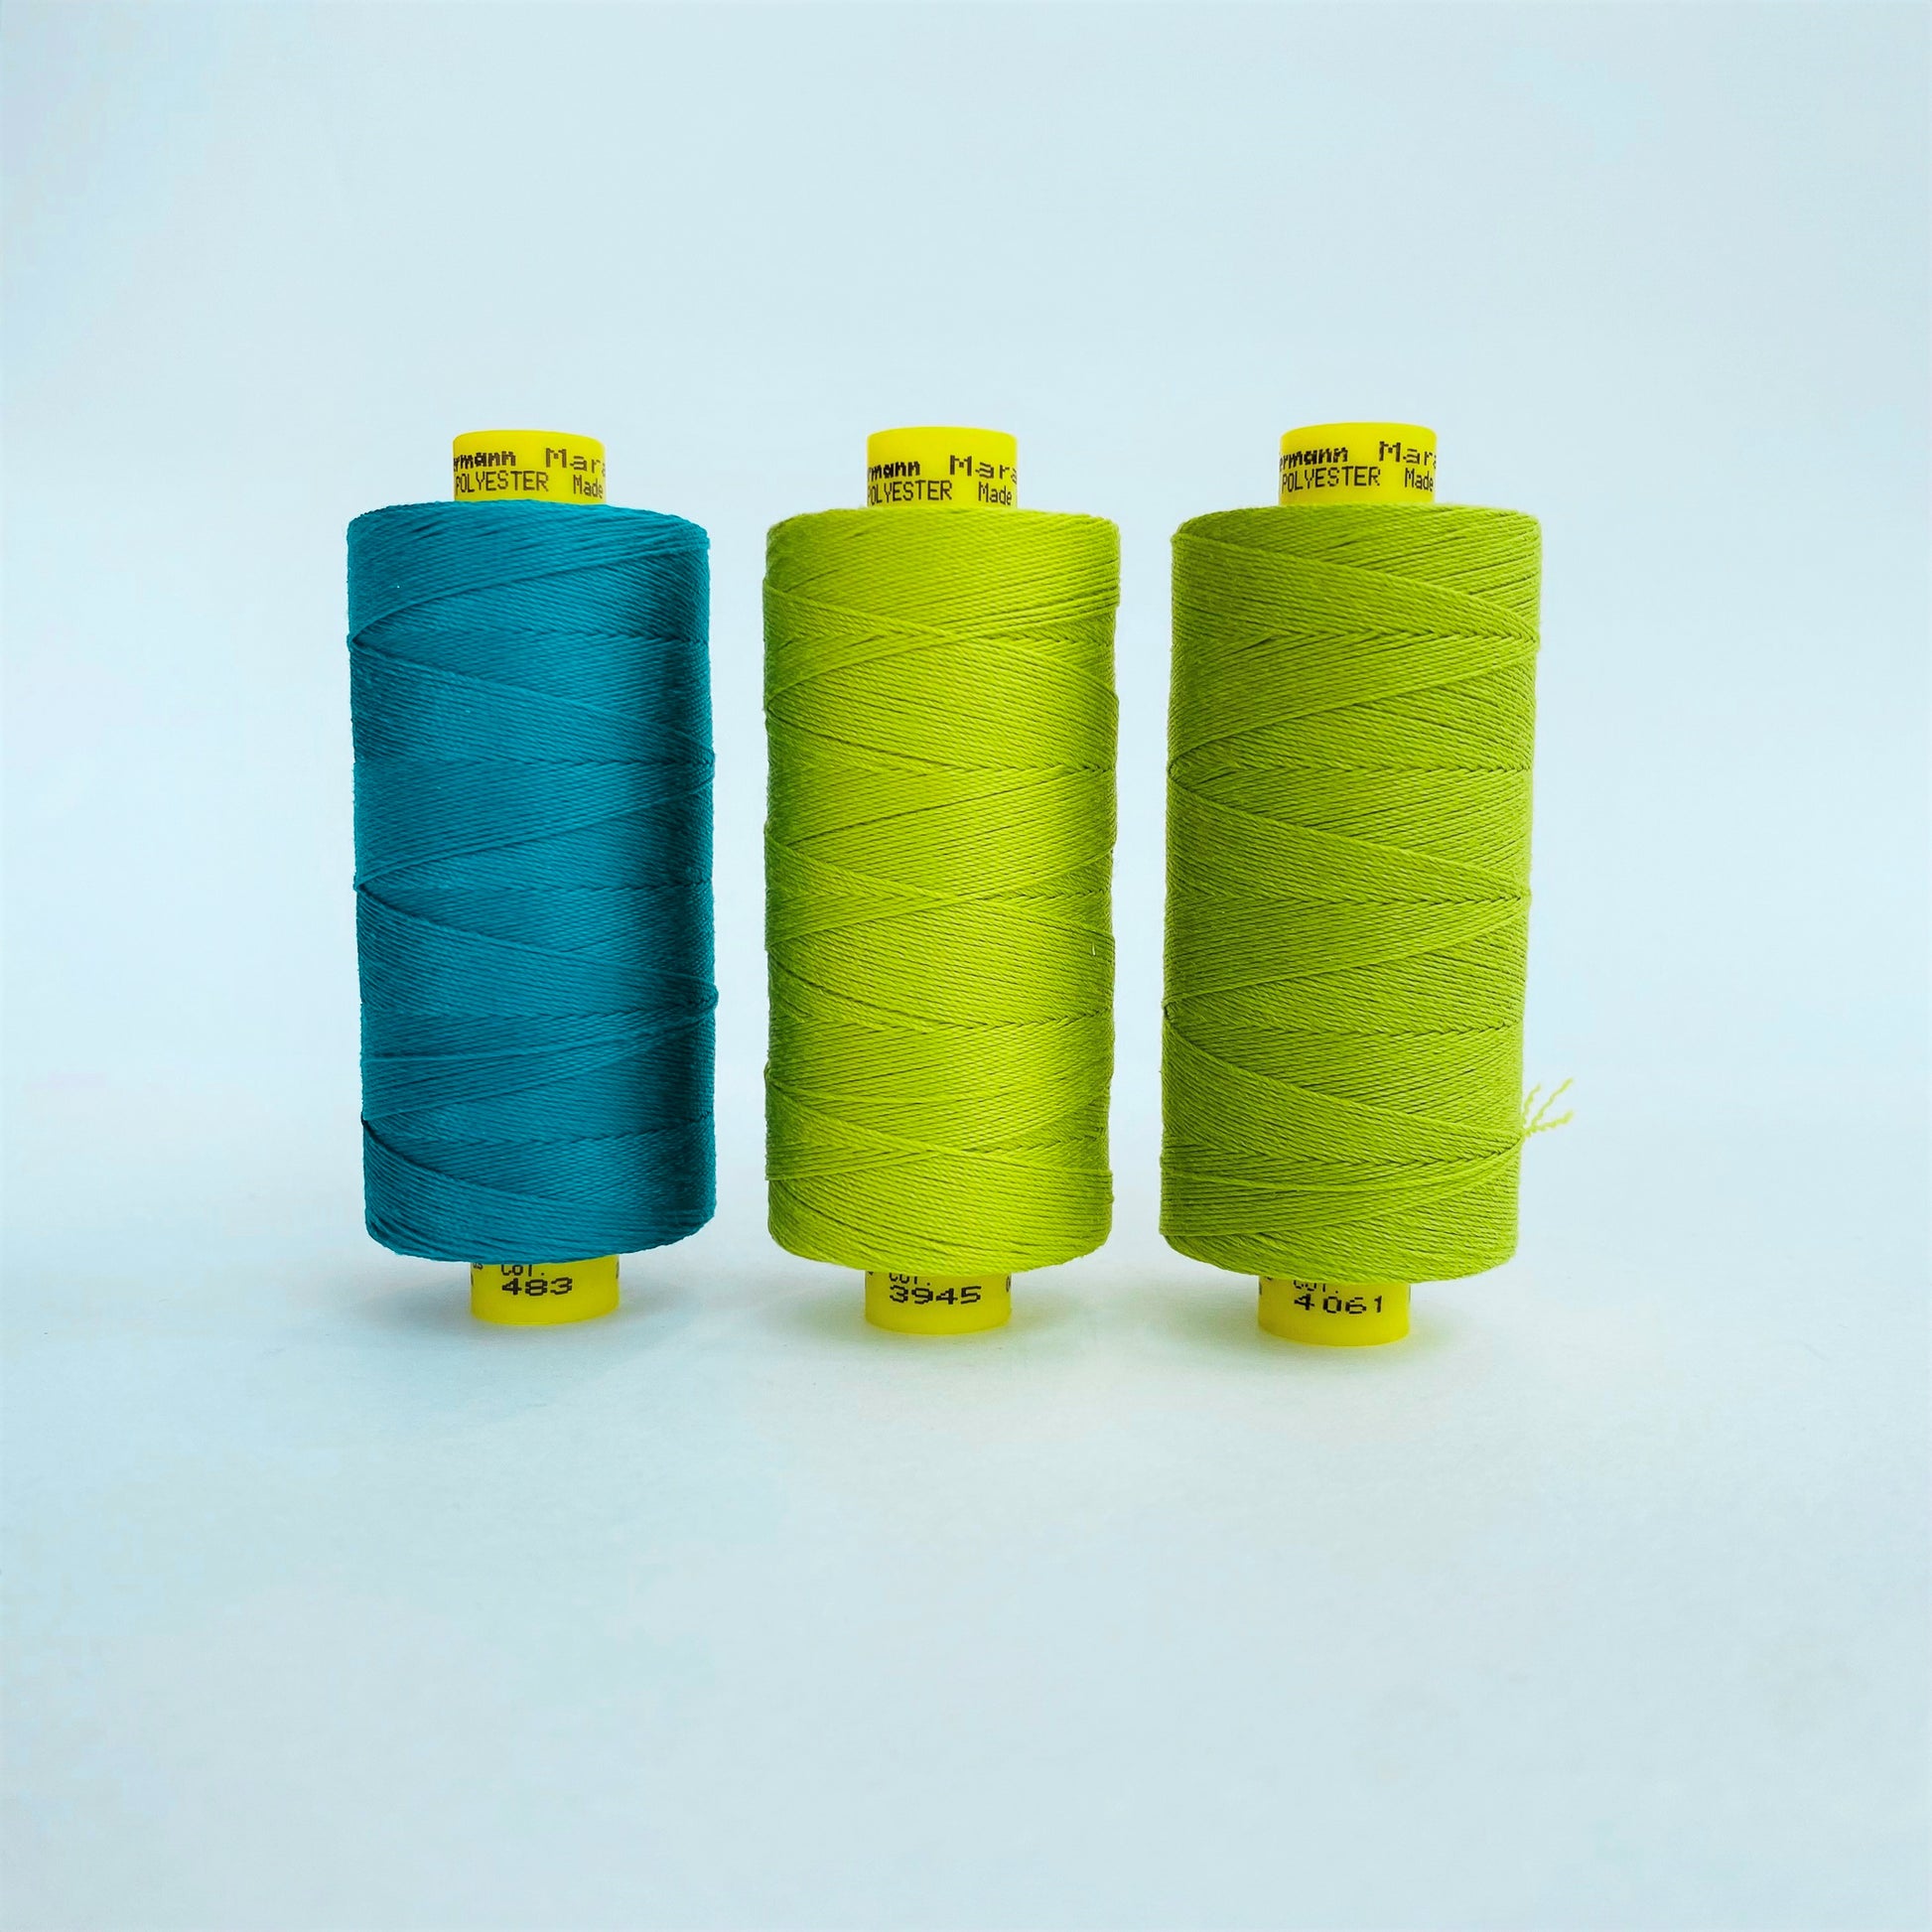 Gutermann Mara #30 Top-Stitch Sewing Thread 300m Spools (Green & Teal Shades) - Kleins Haberdashery